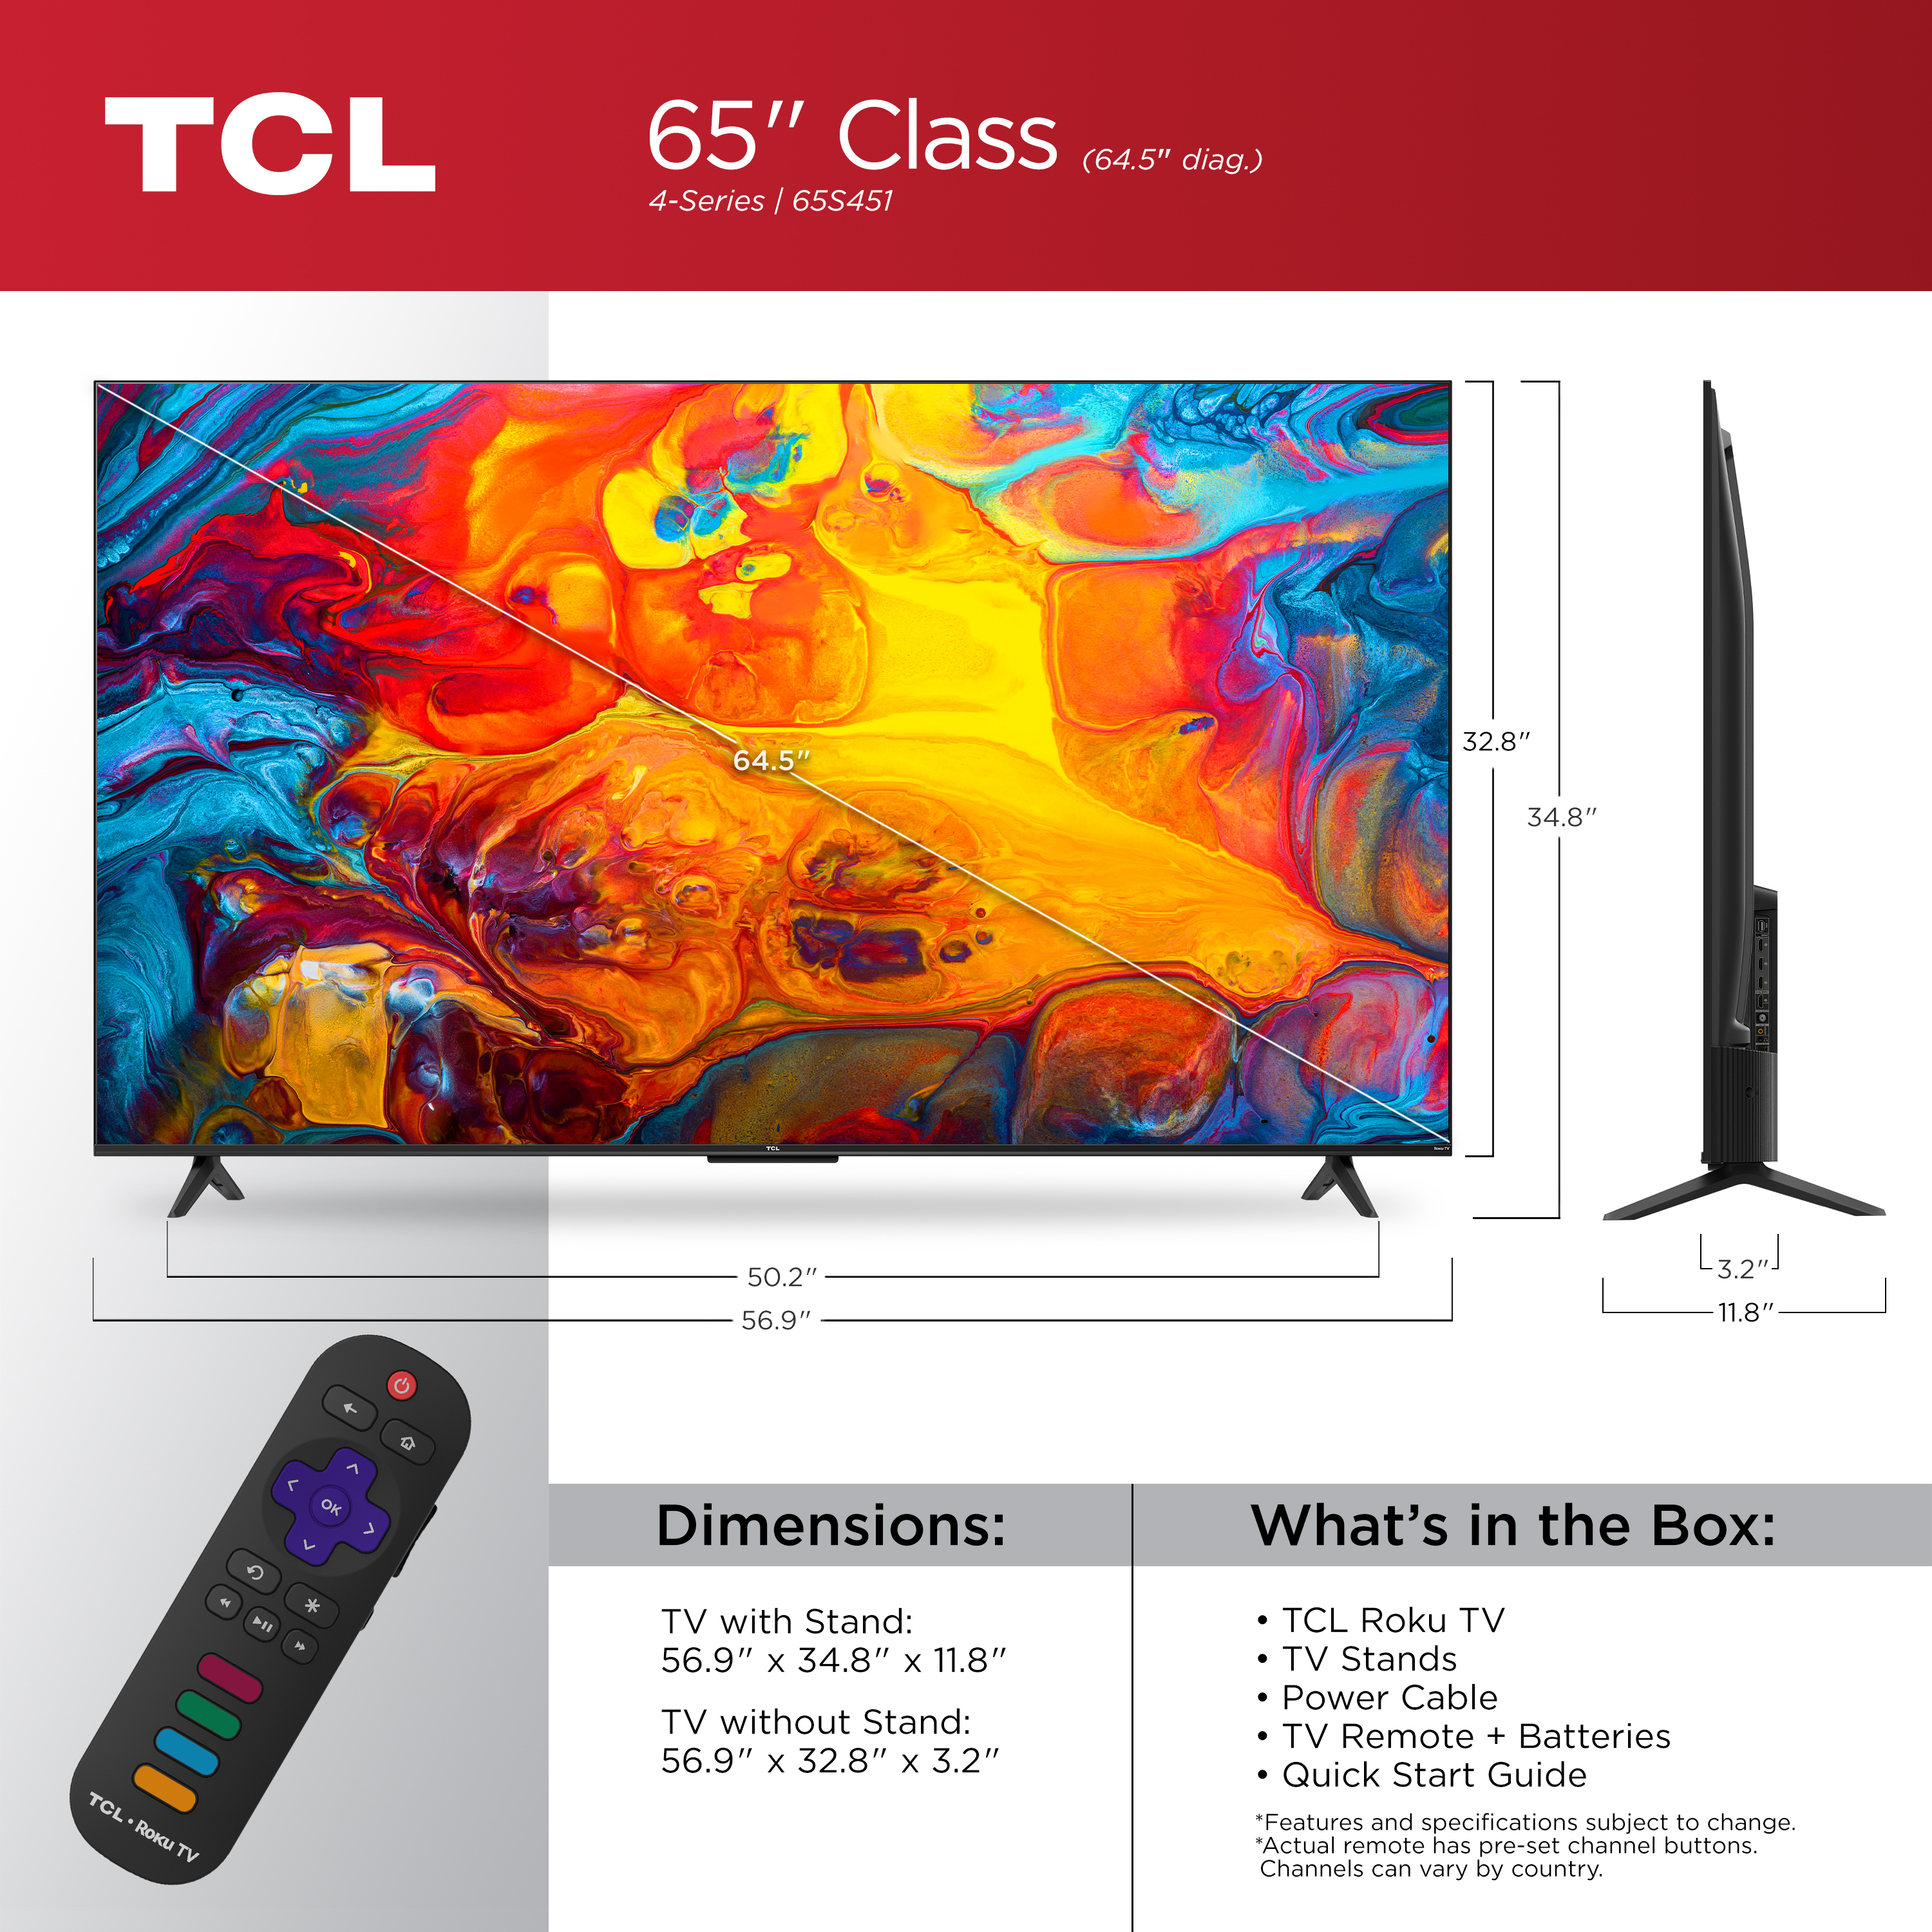 TCL 65" Class 4-Series 4K UHD HDR Smart Roku TV - 65S451 - image 4 of 20